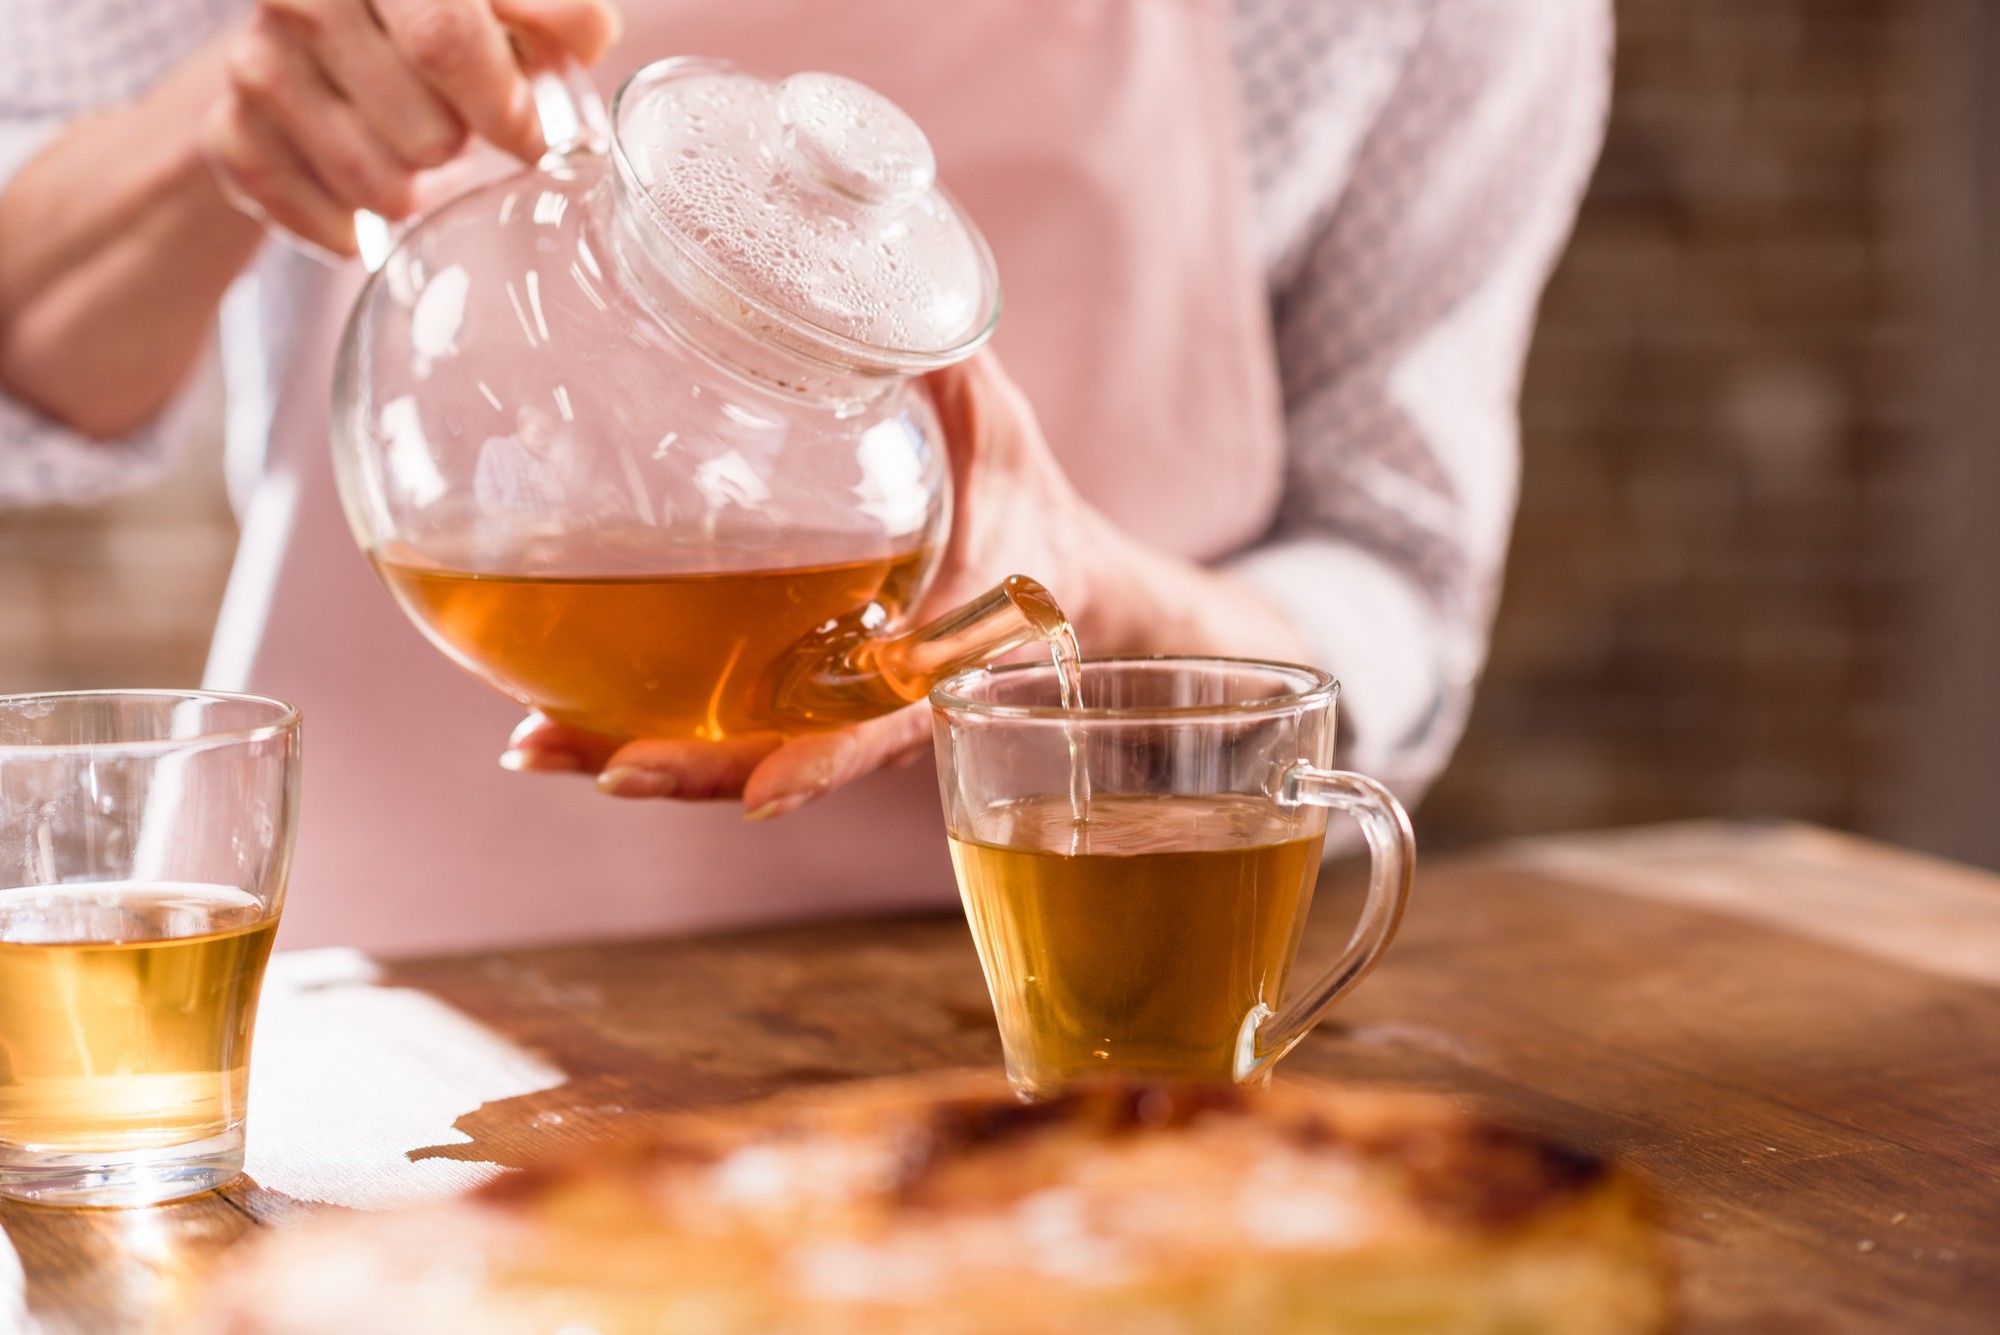 Woman pours Bigelow tea from glass teapot.